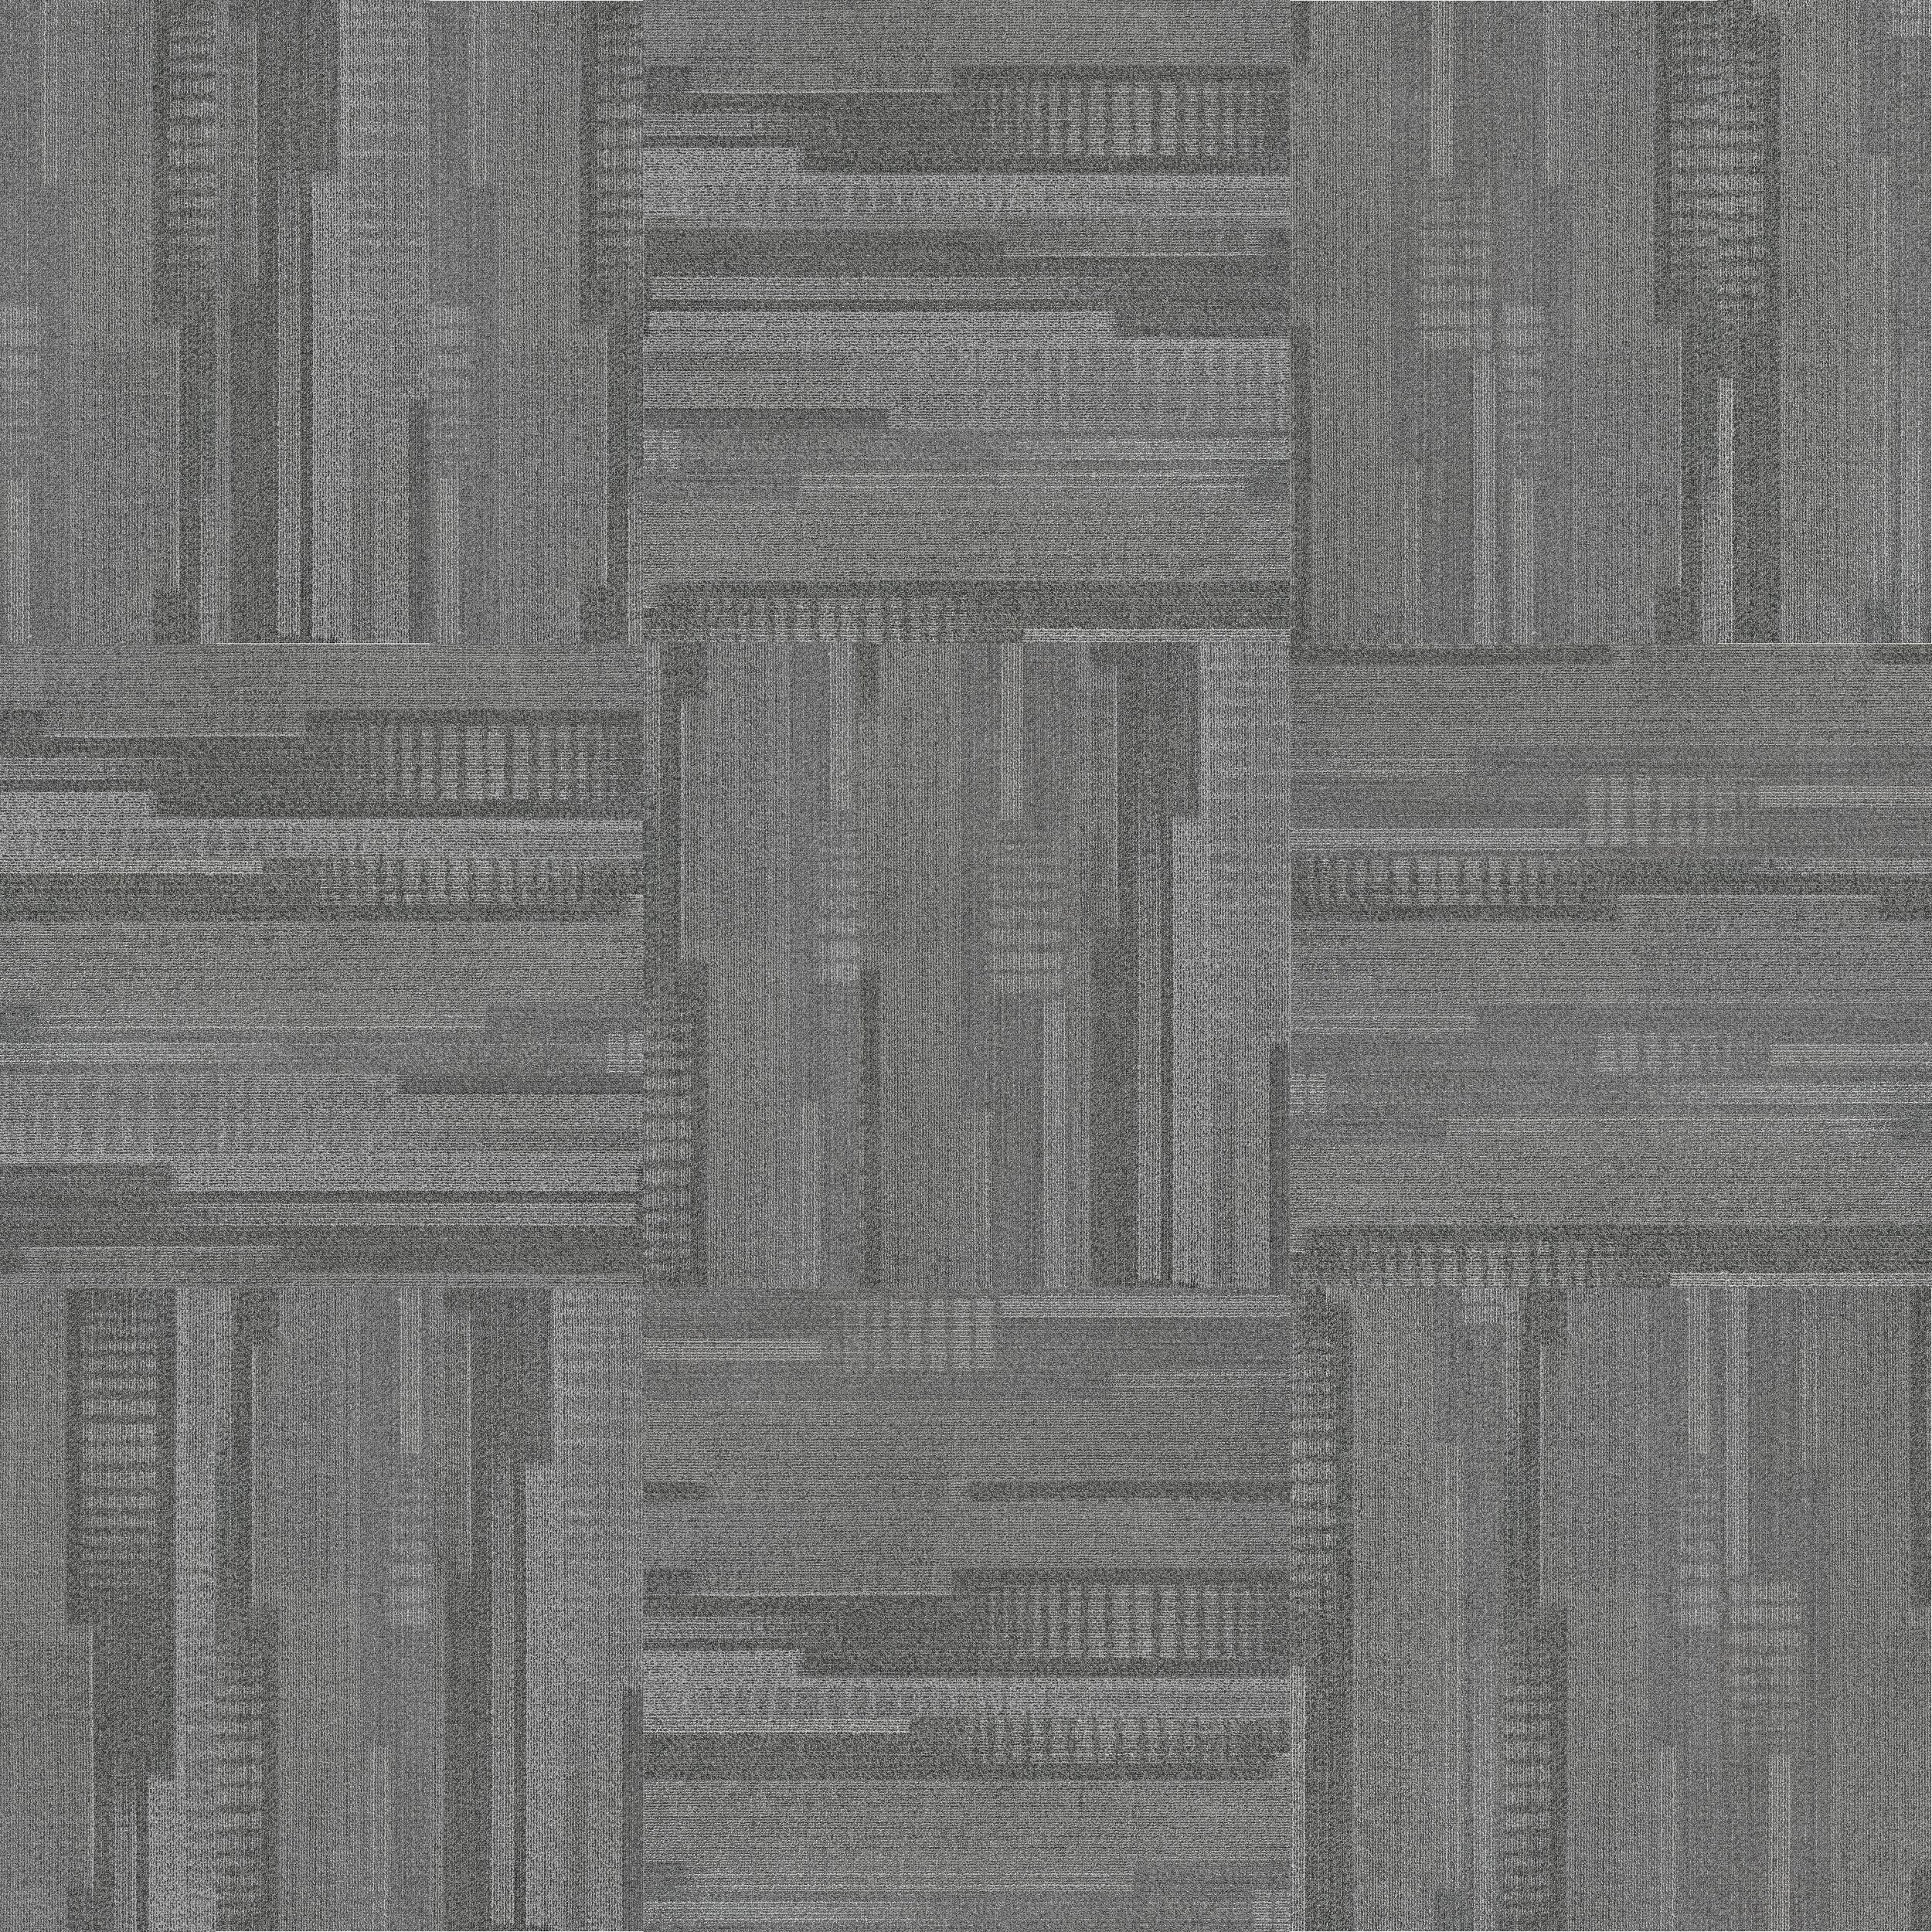 carpet tile texture seamless